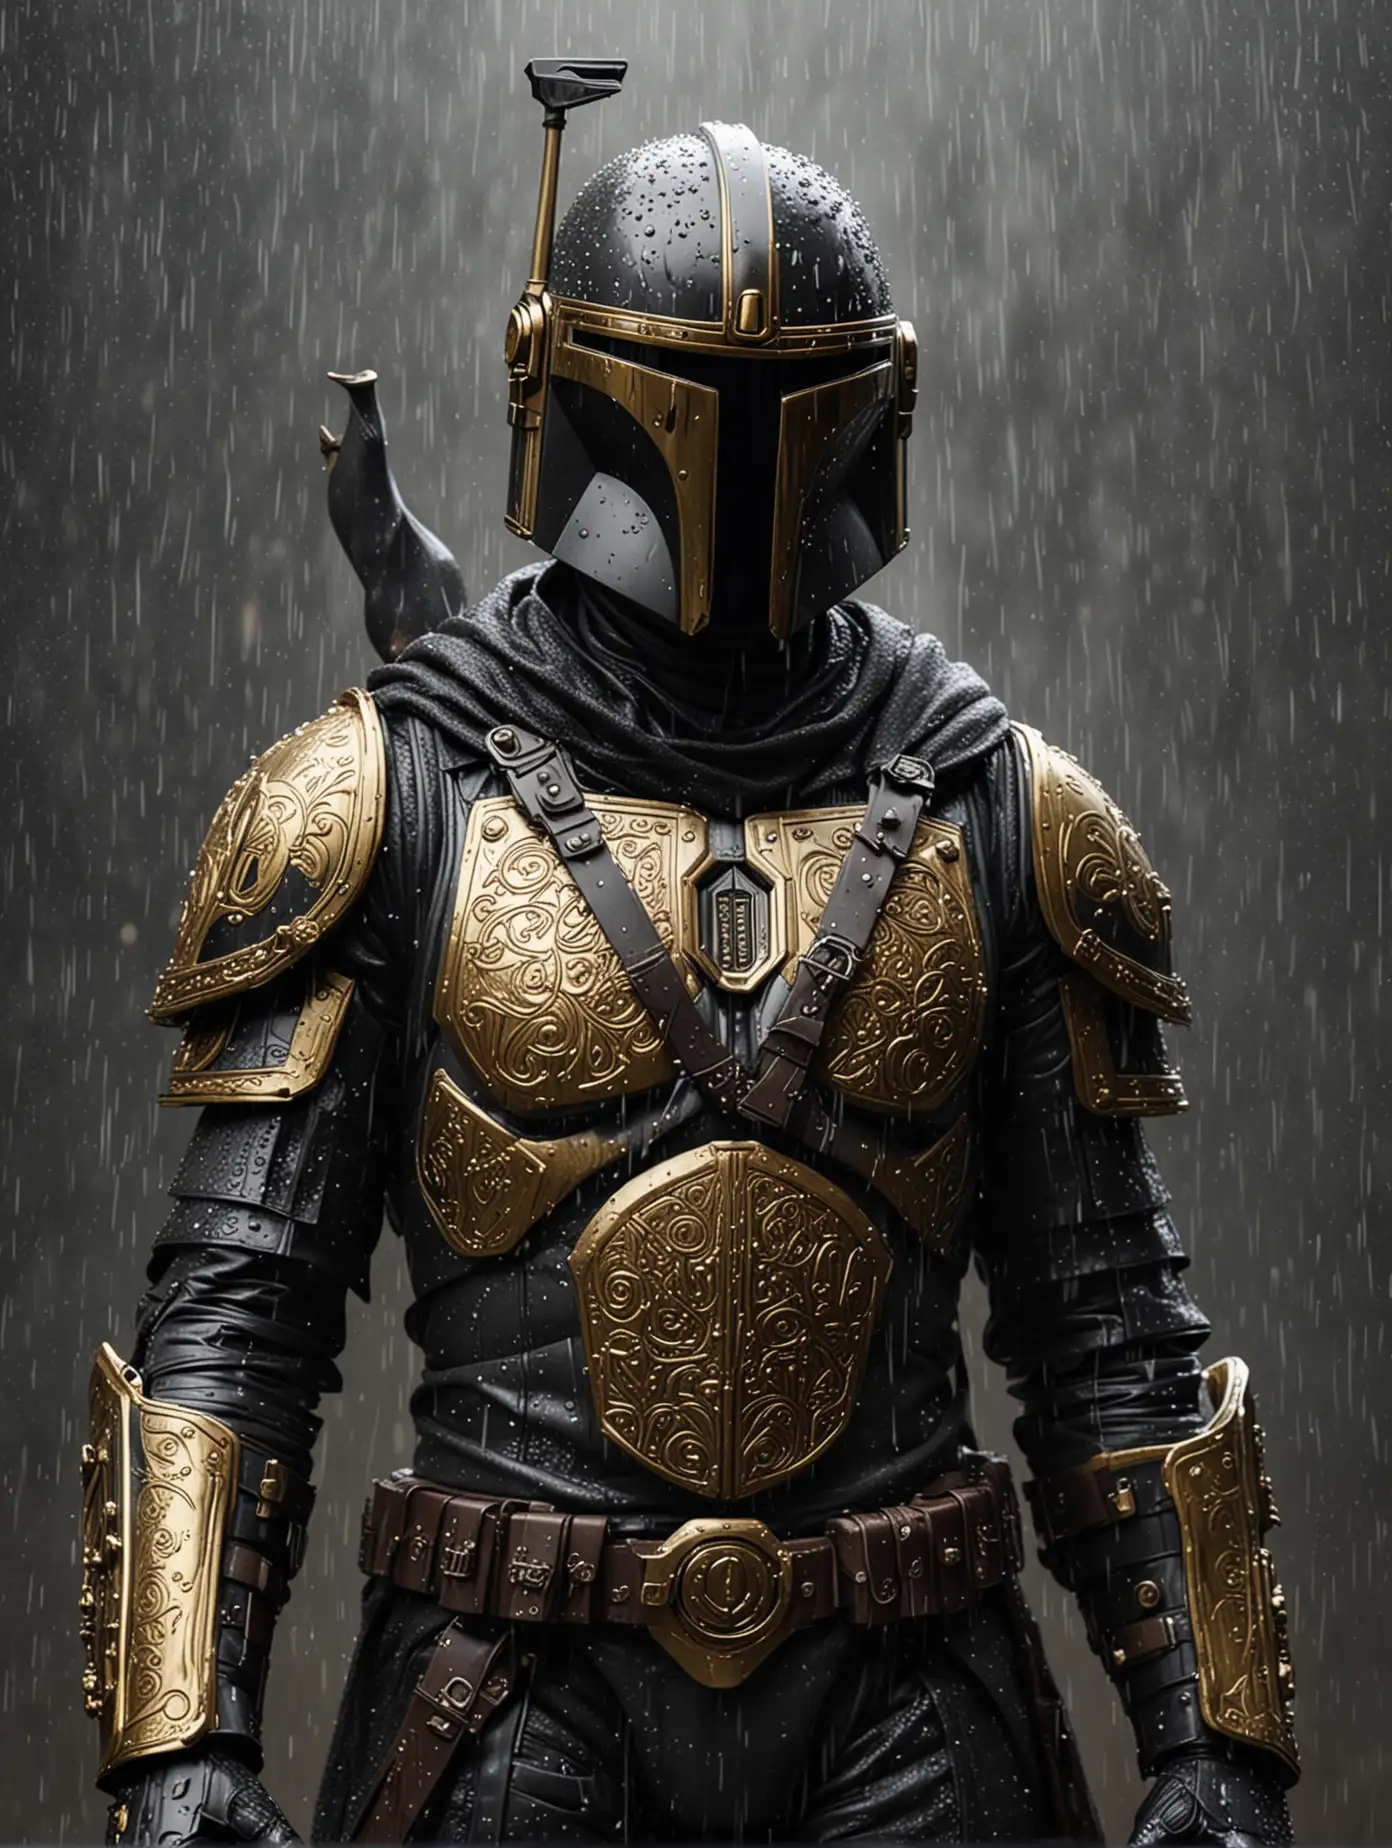 Mandalorian-Warrior-in-Black-Ceramic-Armor-with-Gold-Calligraphic-Patterns-in-Rain